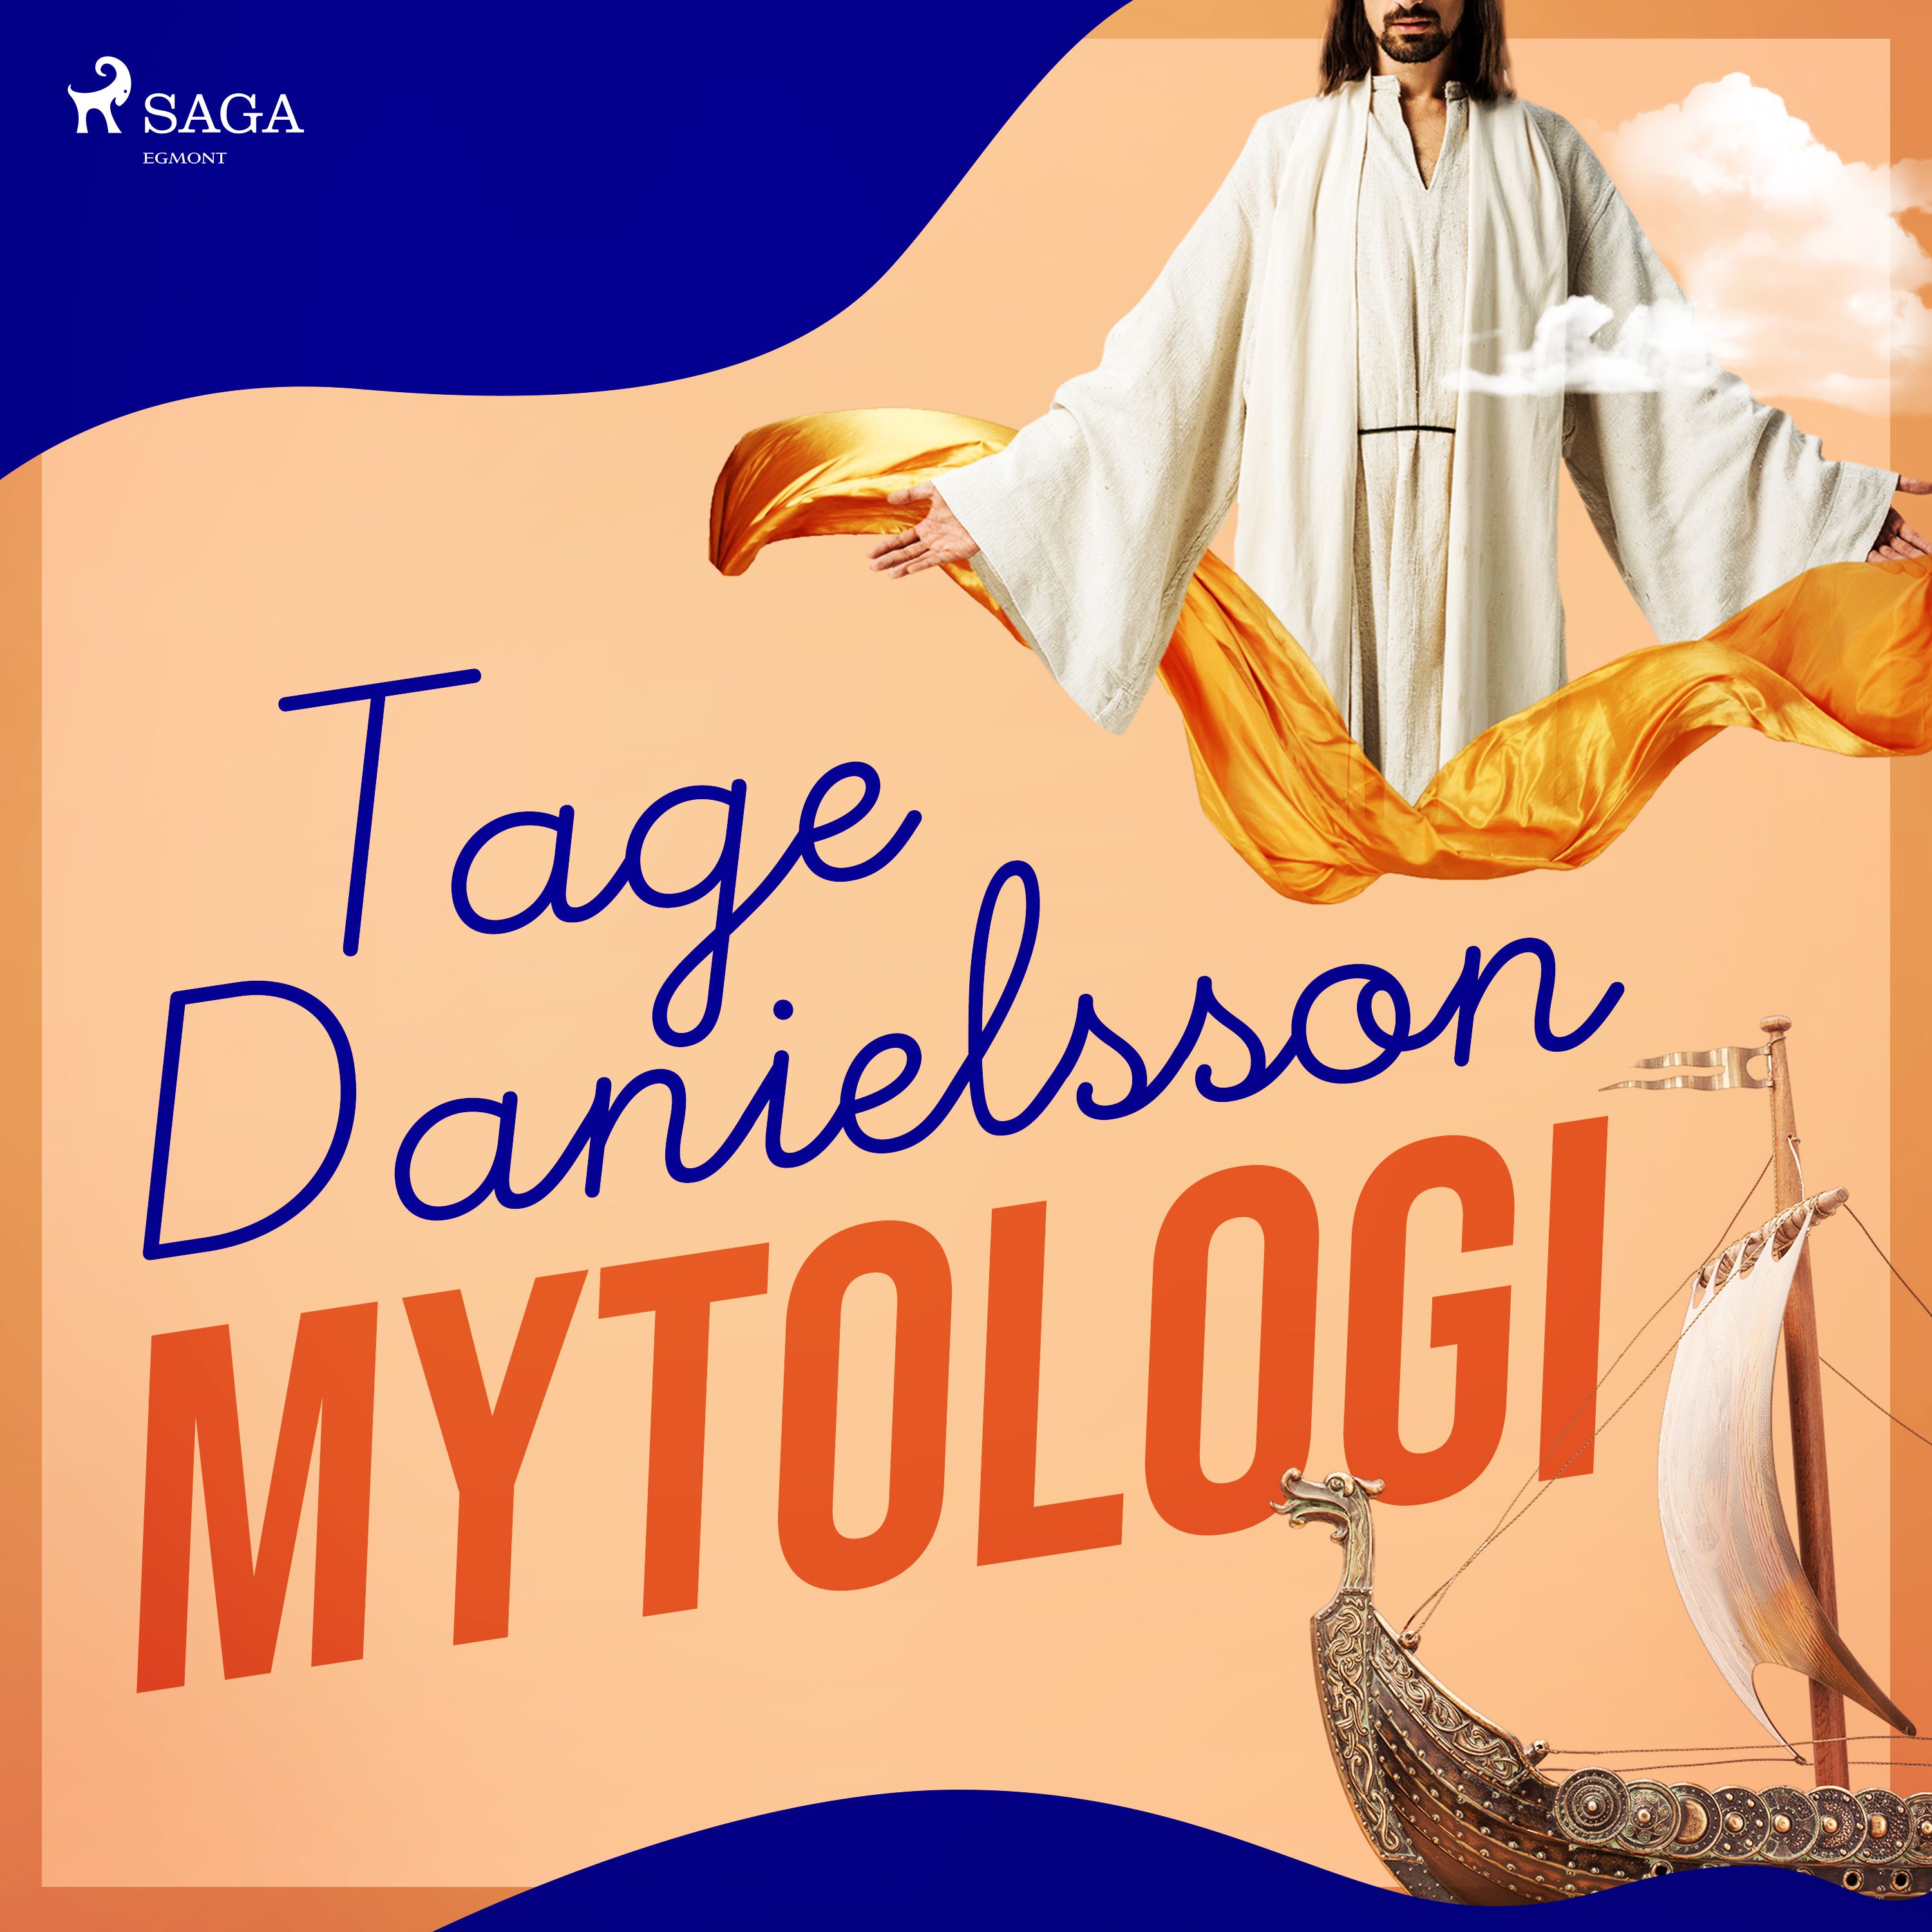 Mytologi, audiobook by Tage Danielsson